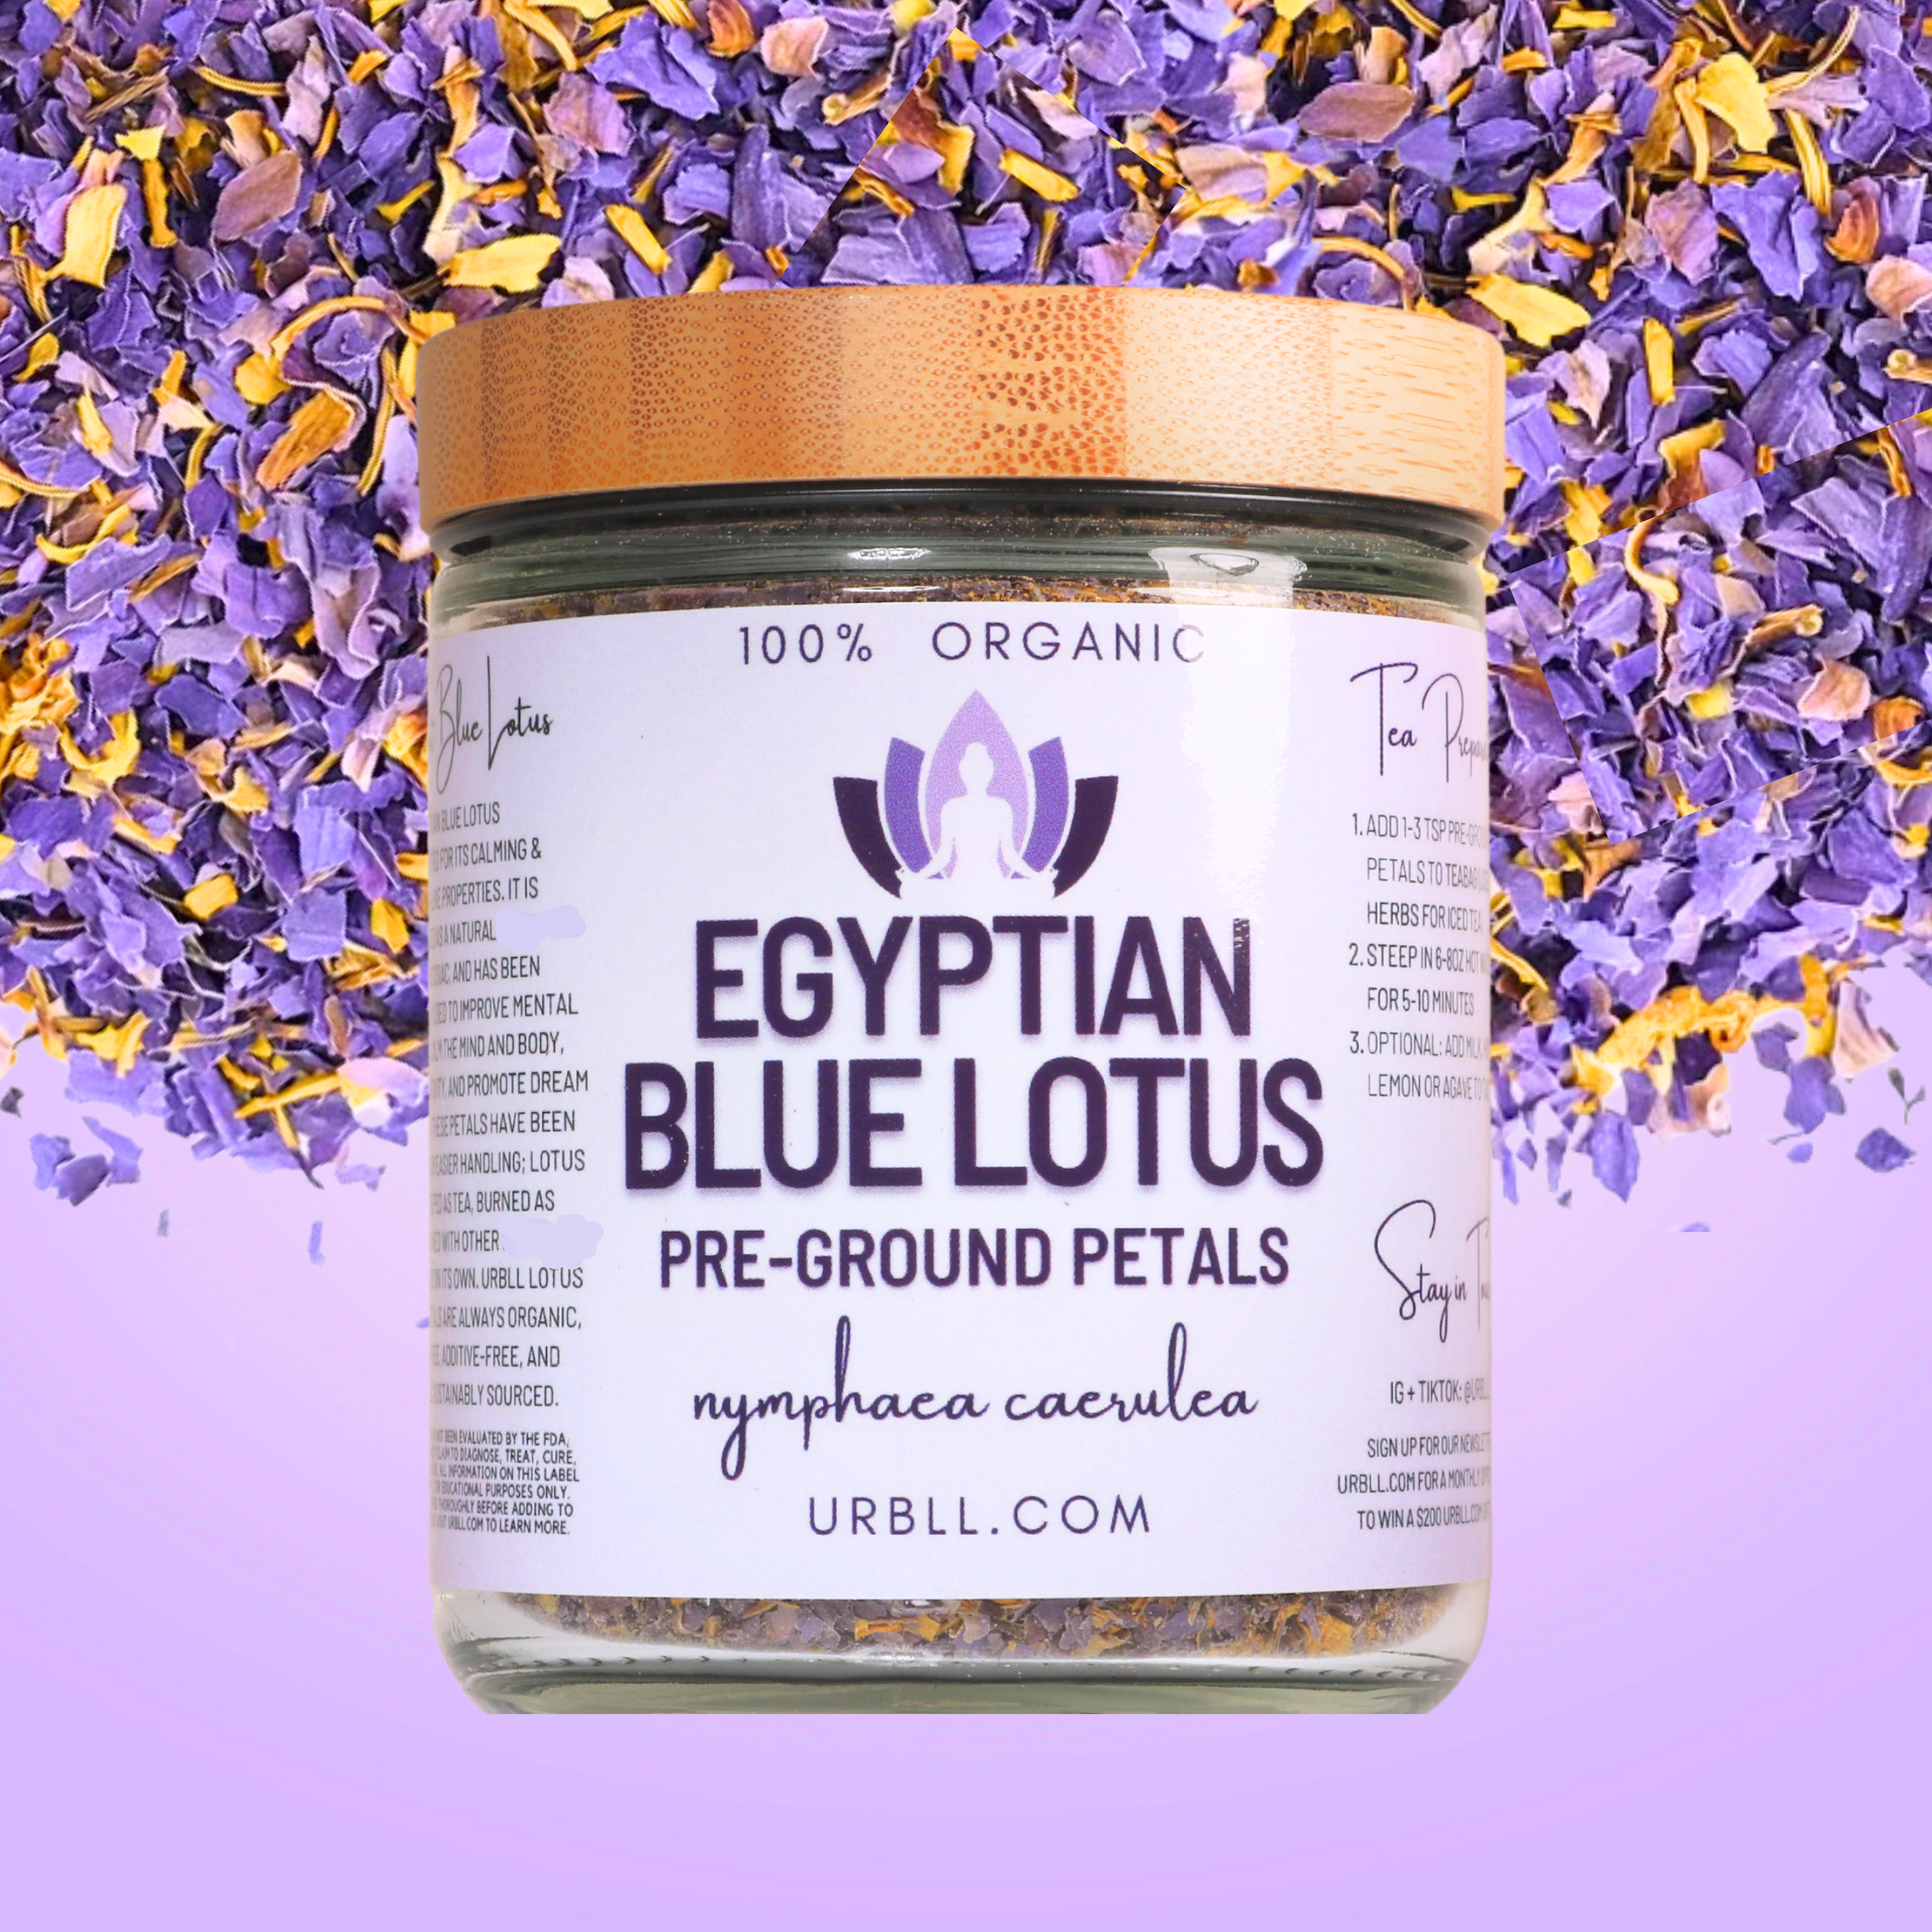 Egyptian Blue Lotus Pre-Ground Petals